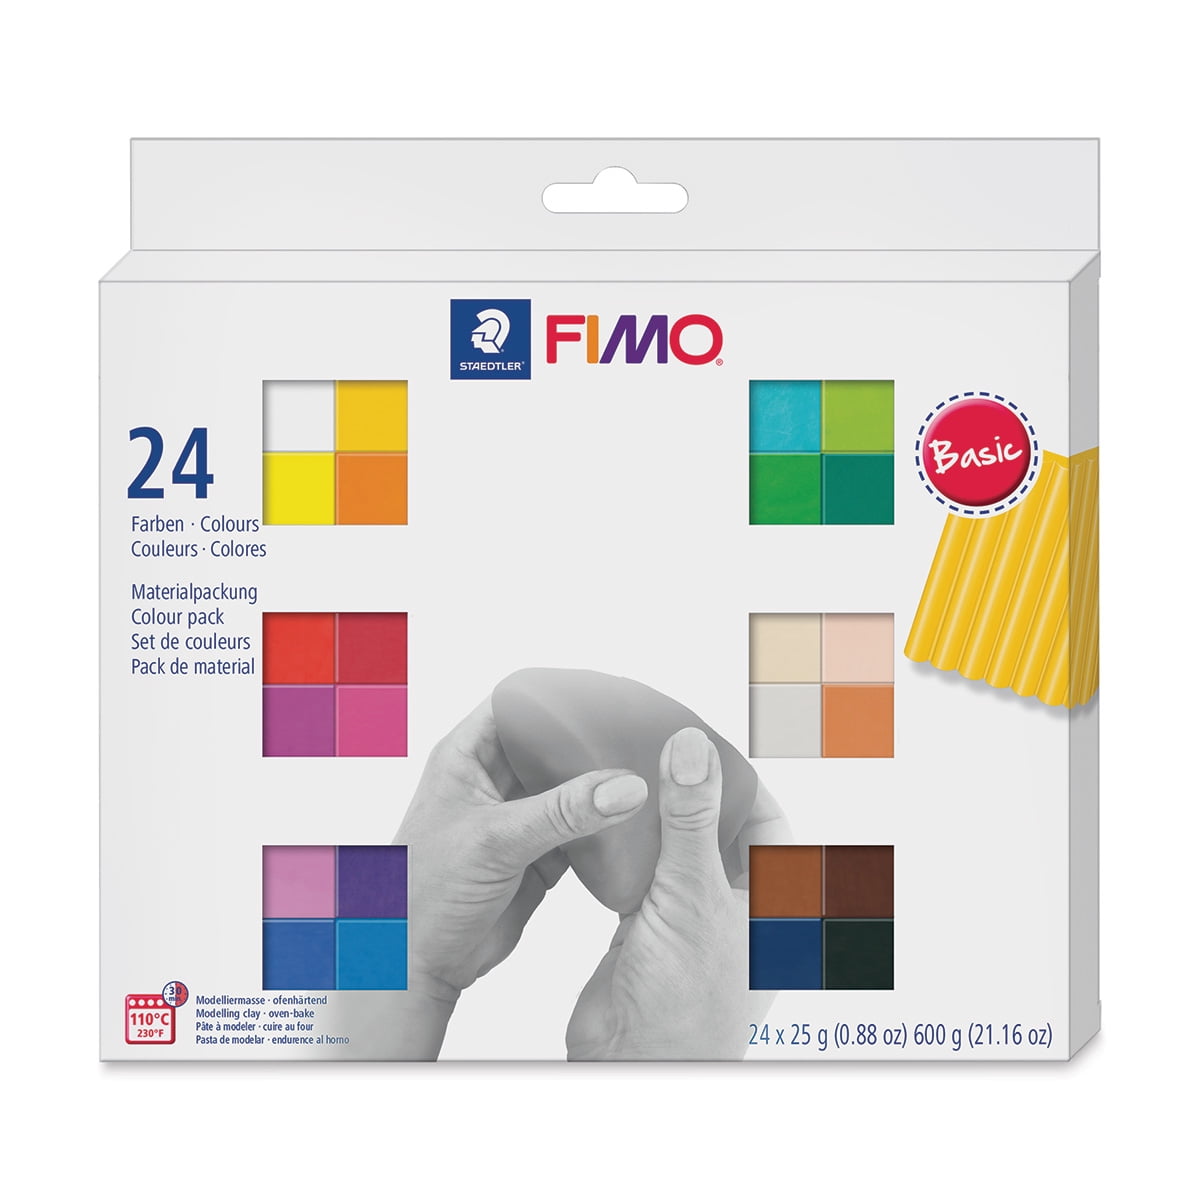 FIMO Polymer Clay • 2wards Polymer Clay